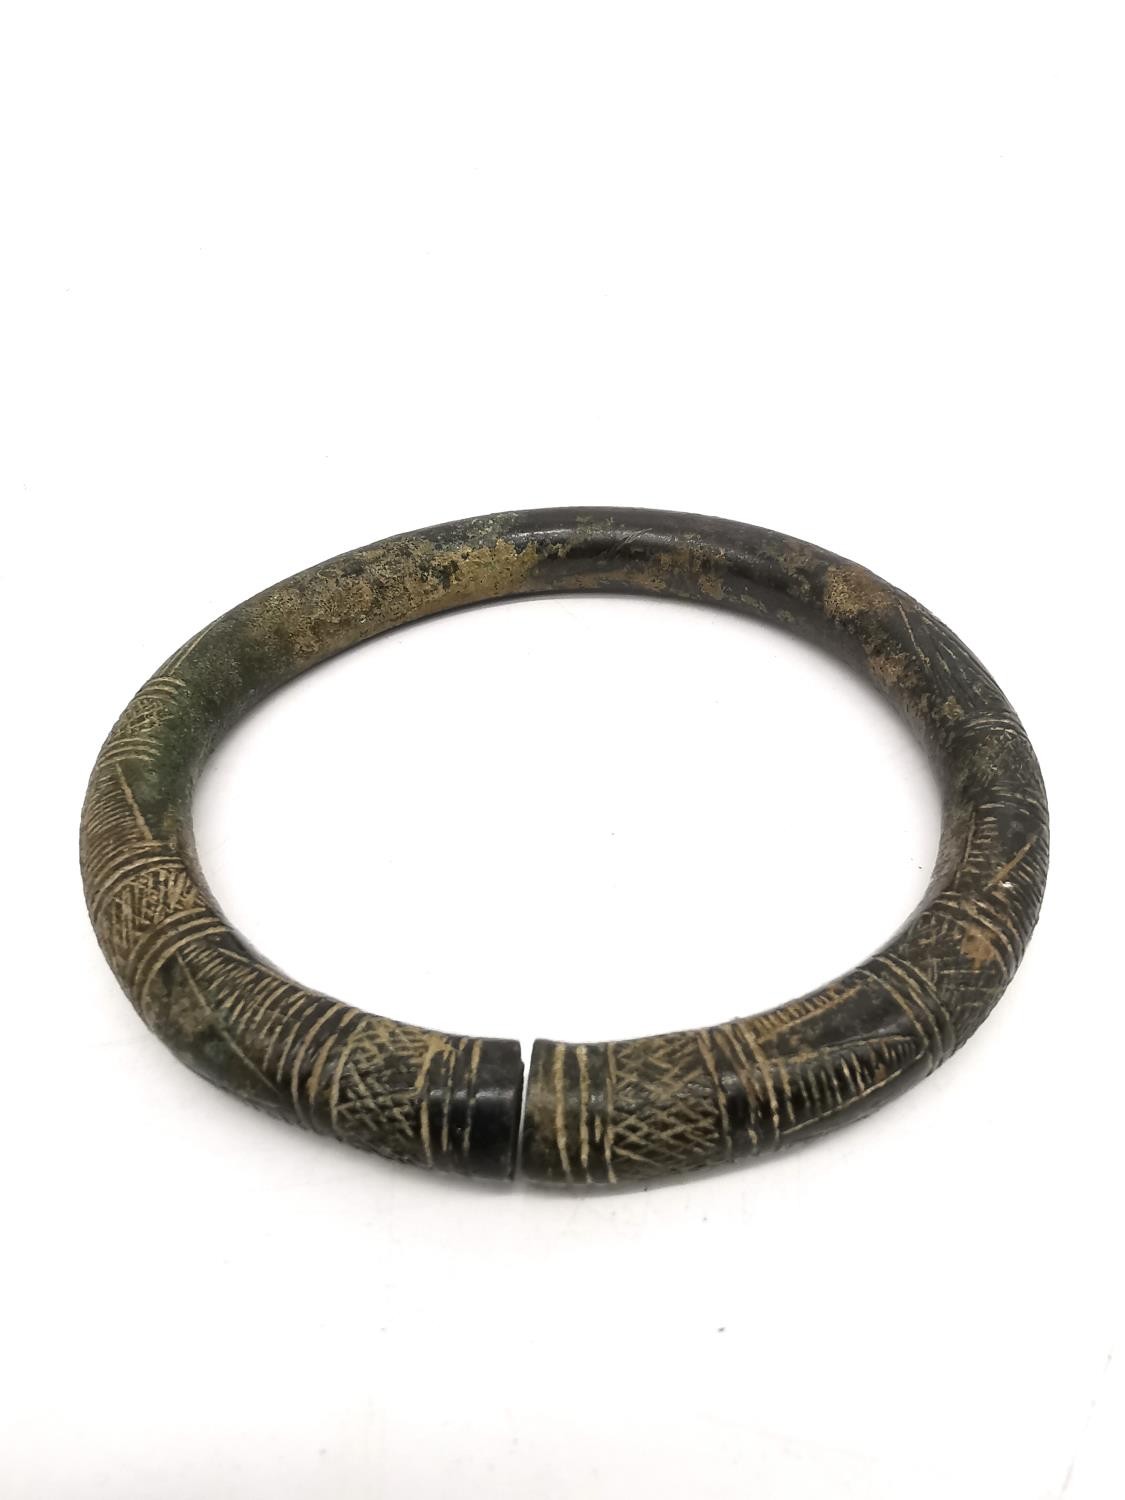 An ancient Iranian bronze torque arm bracelet/necklace with incised design. Diameter 12cm, - Image 2 of 6